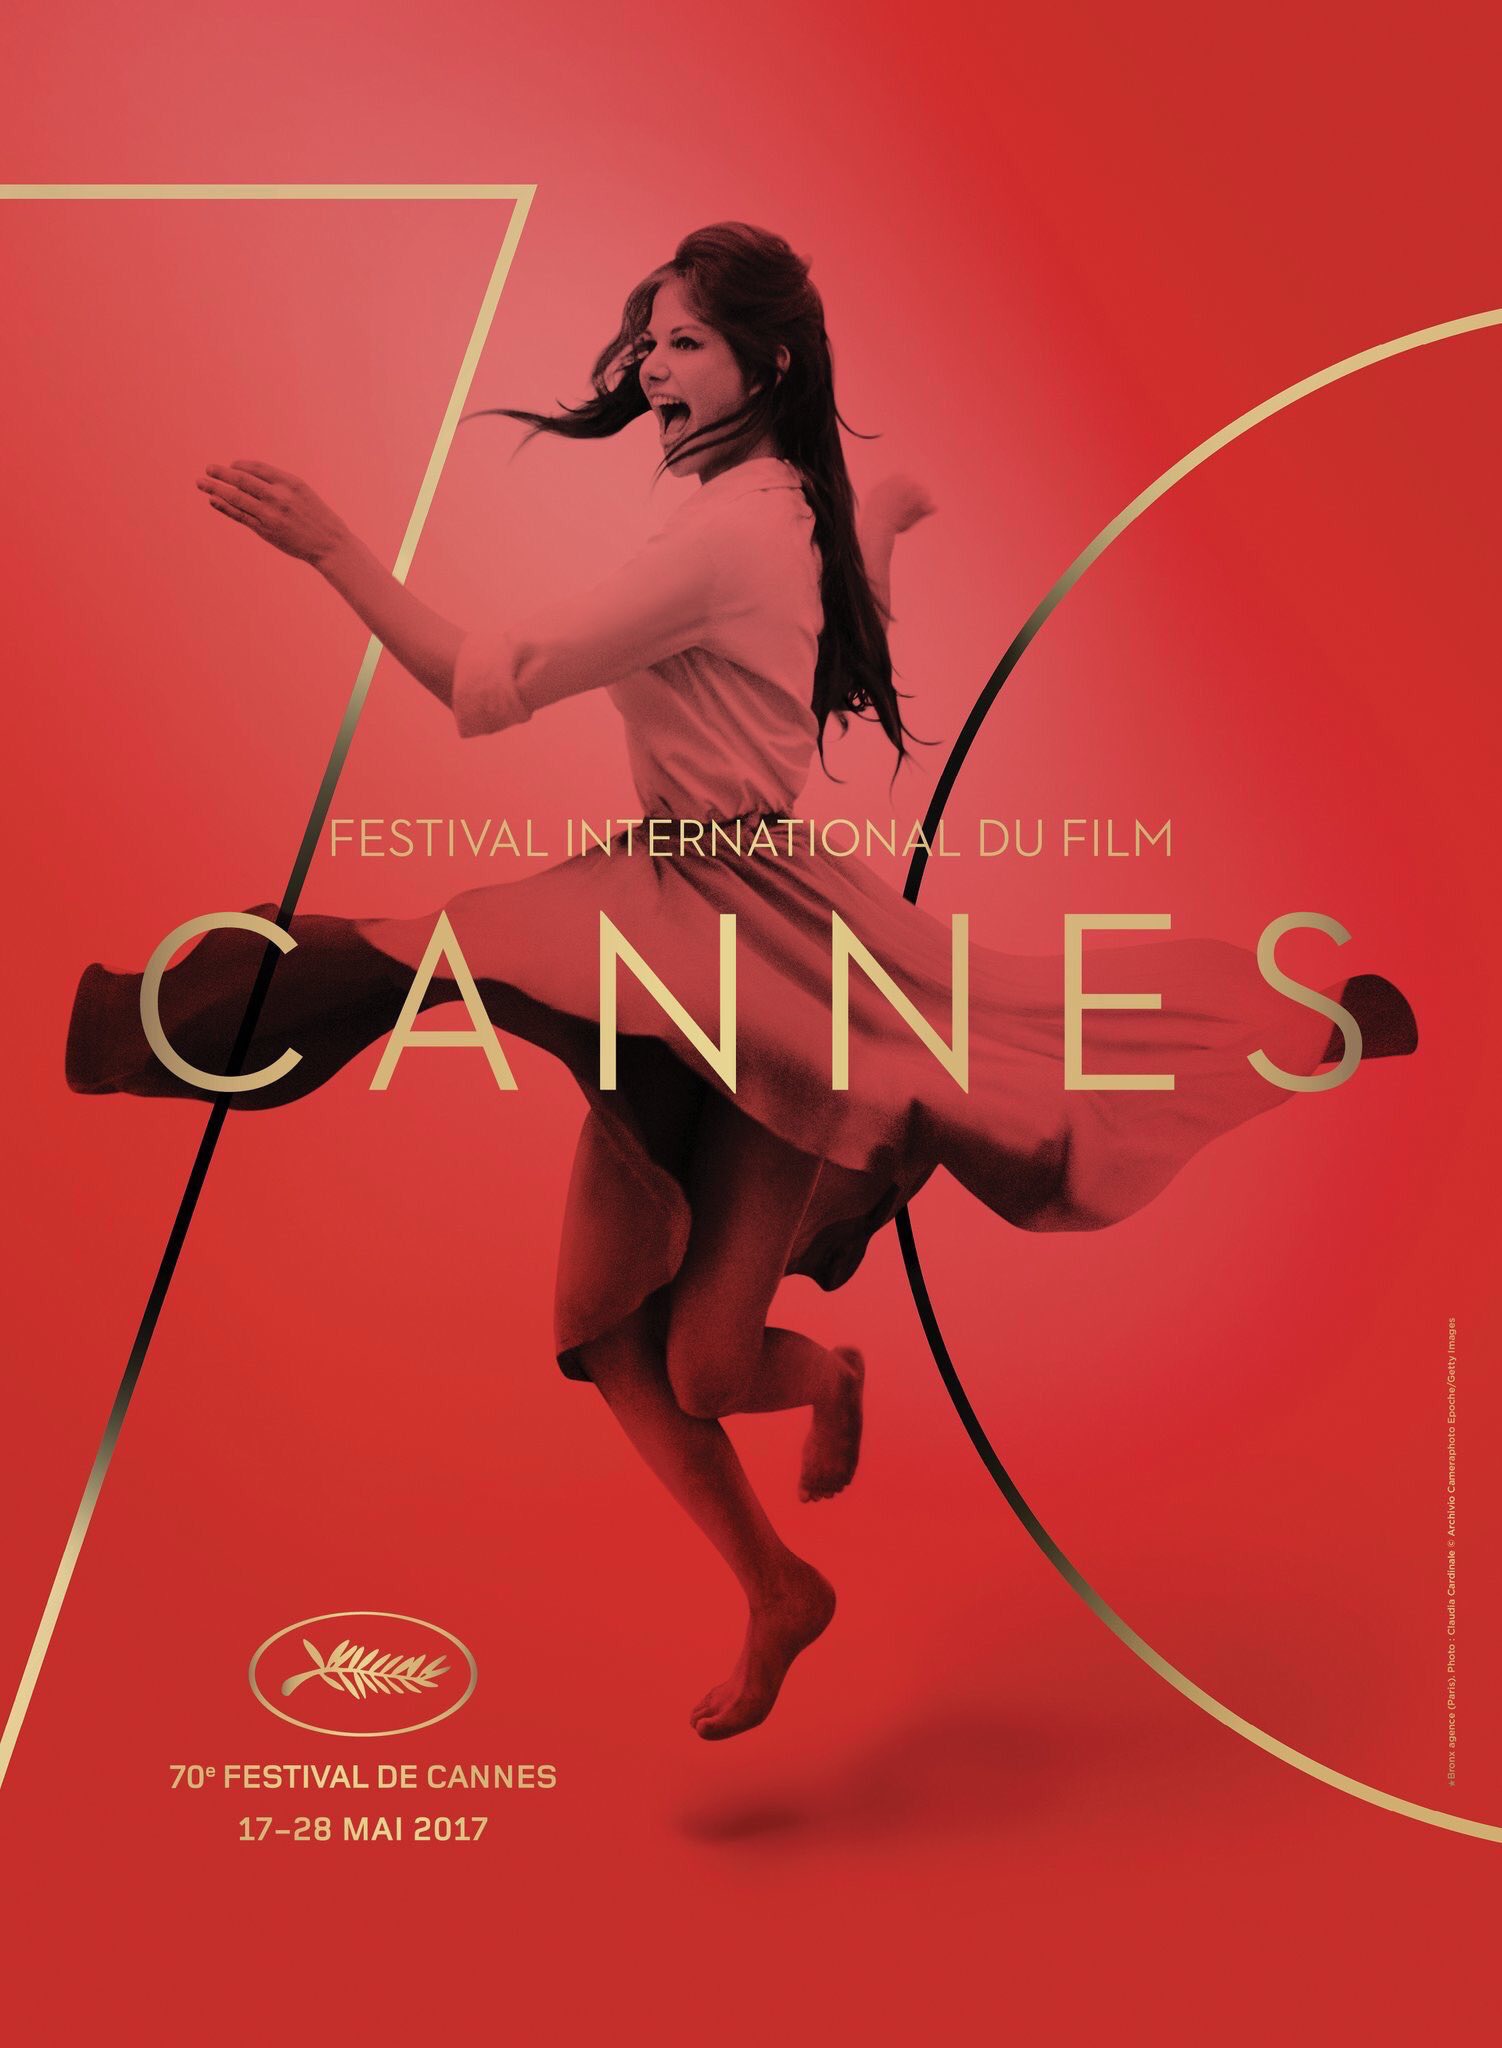 Cannes International Film Festival (7 of 8) Mega Sized Movie Poster